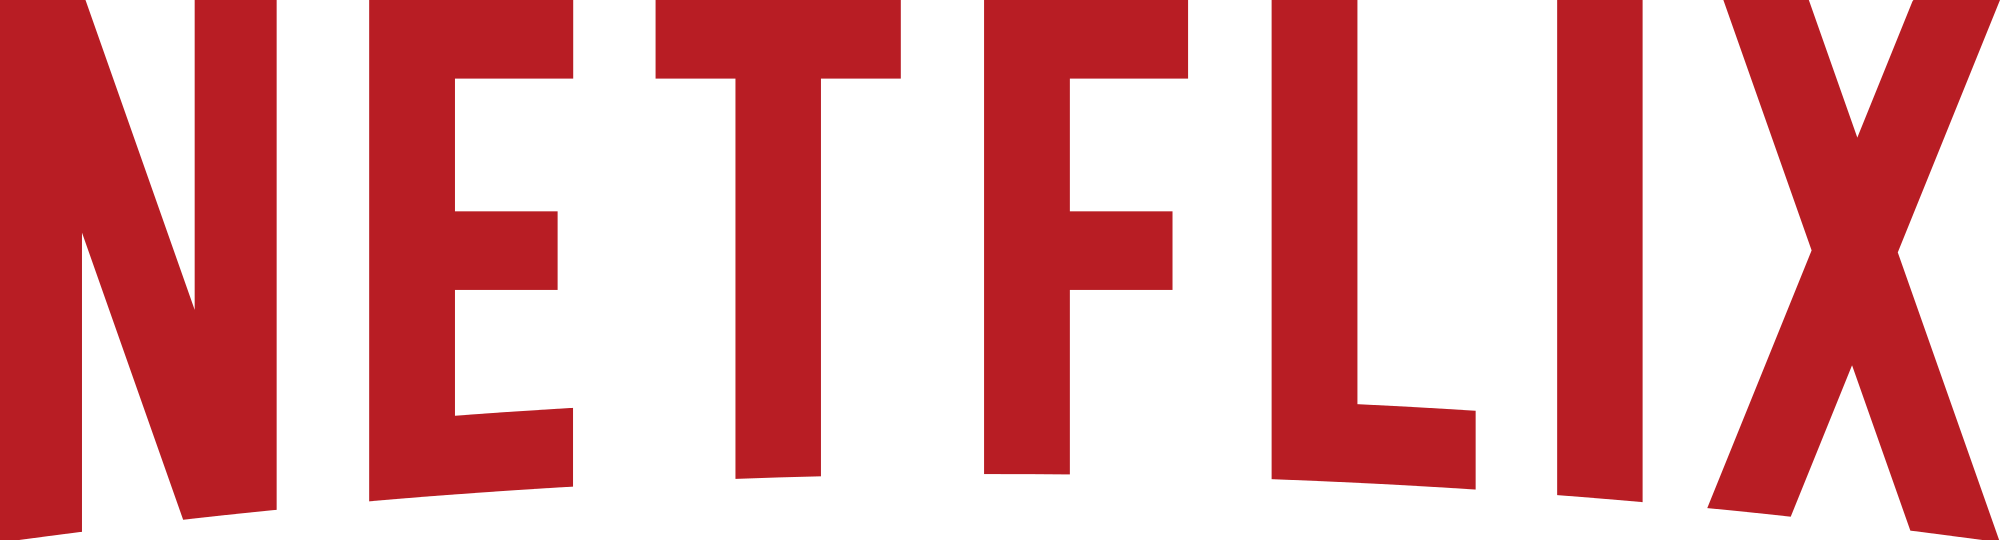 Imagen - Netflix Logo.png | Marvel Cinematic Universe Wiki ... - Galaxy Netflix Logo